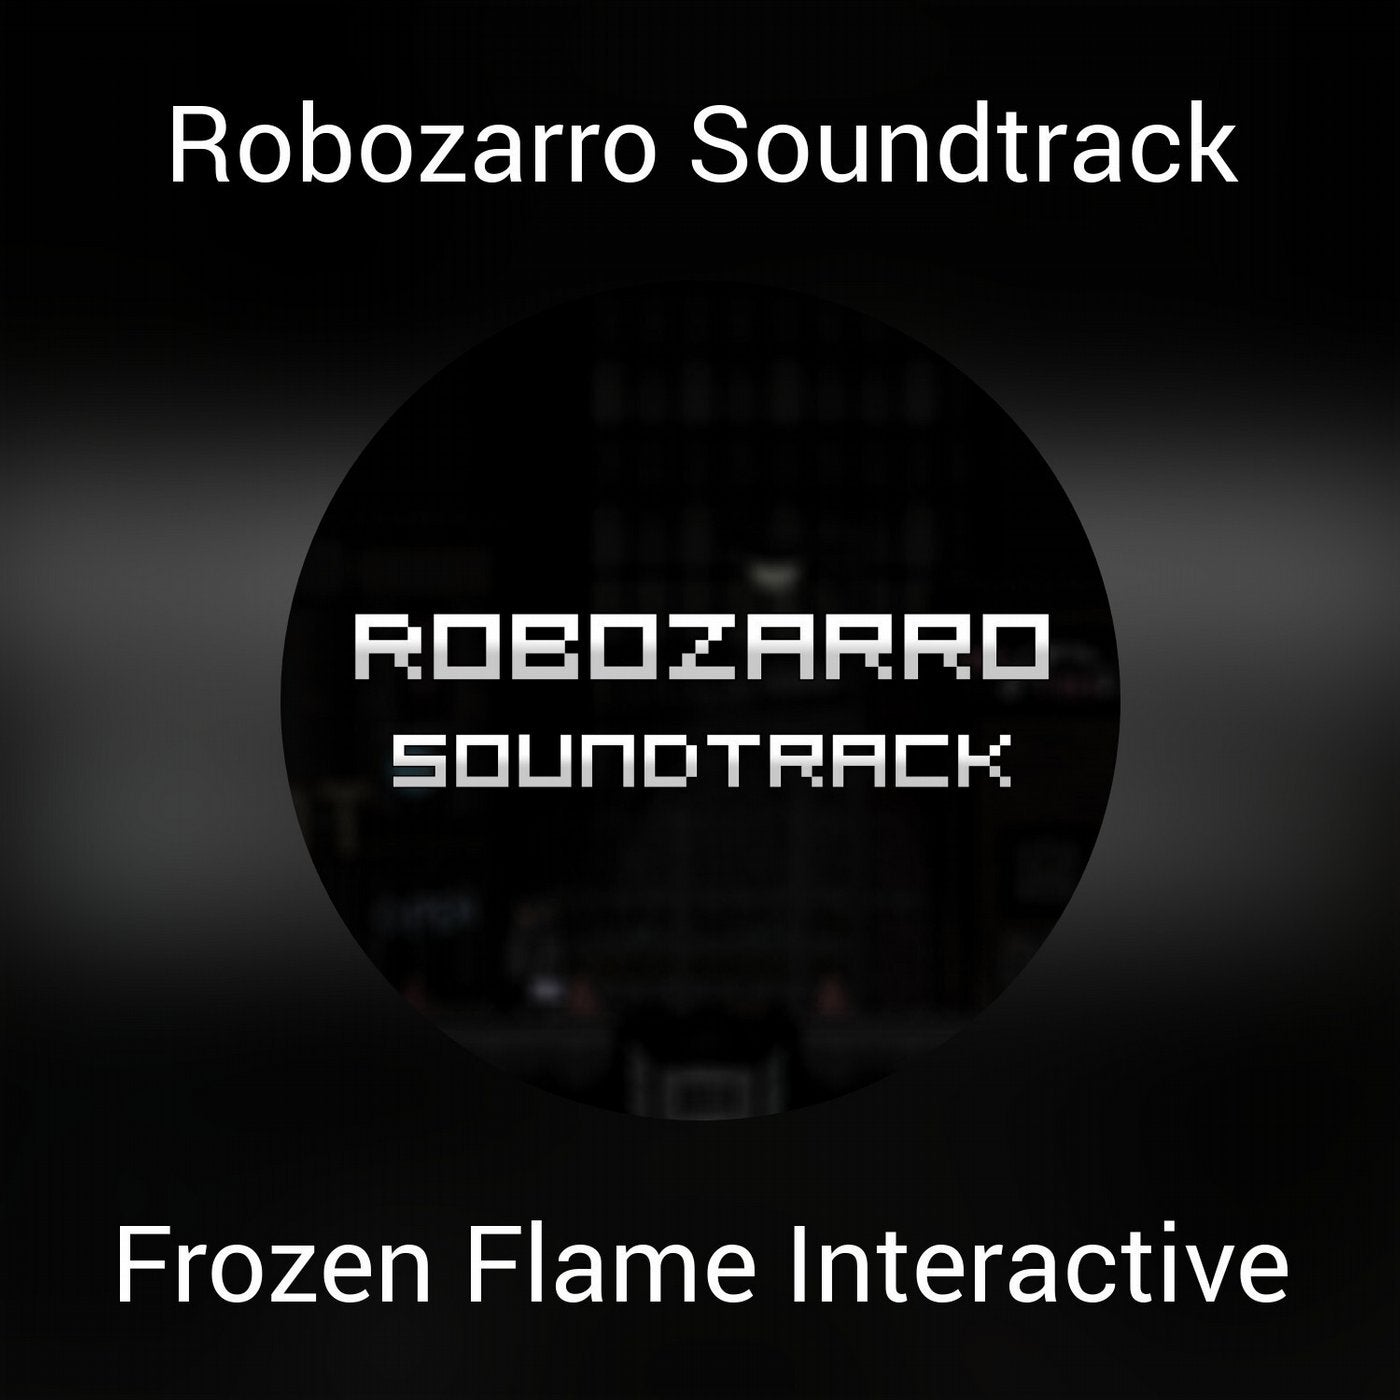 Robozarro Soundtrack